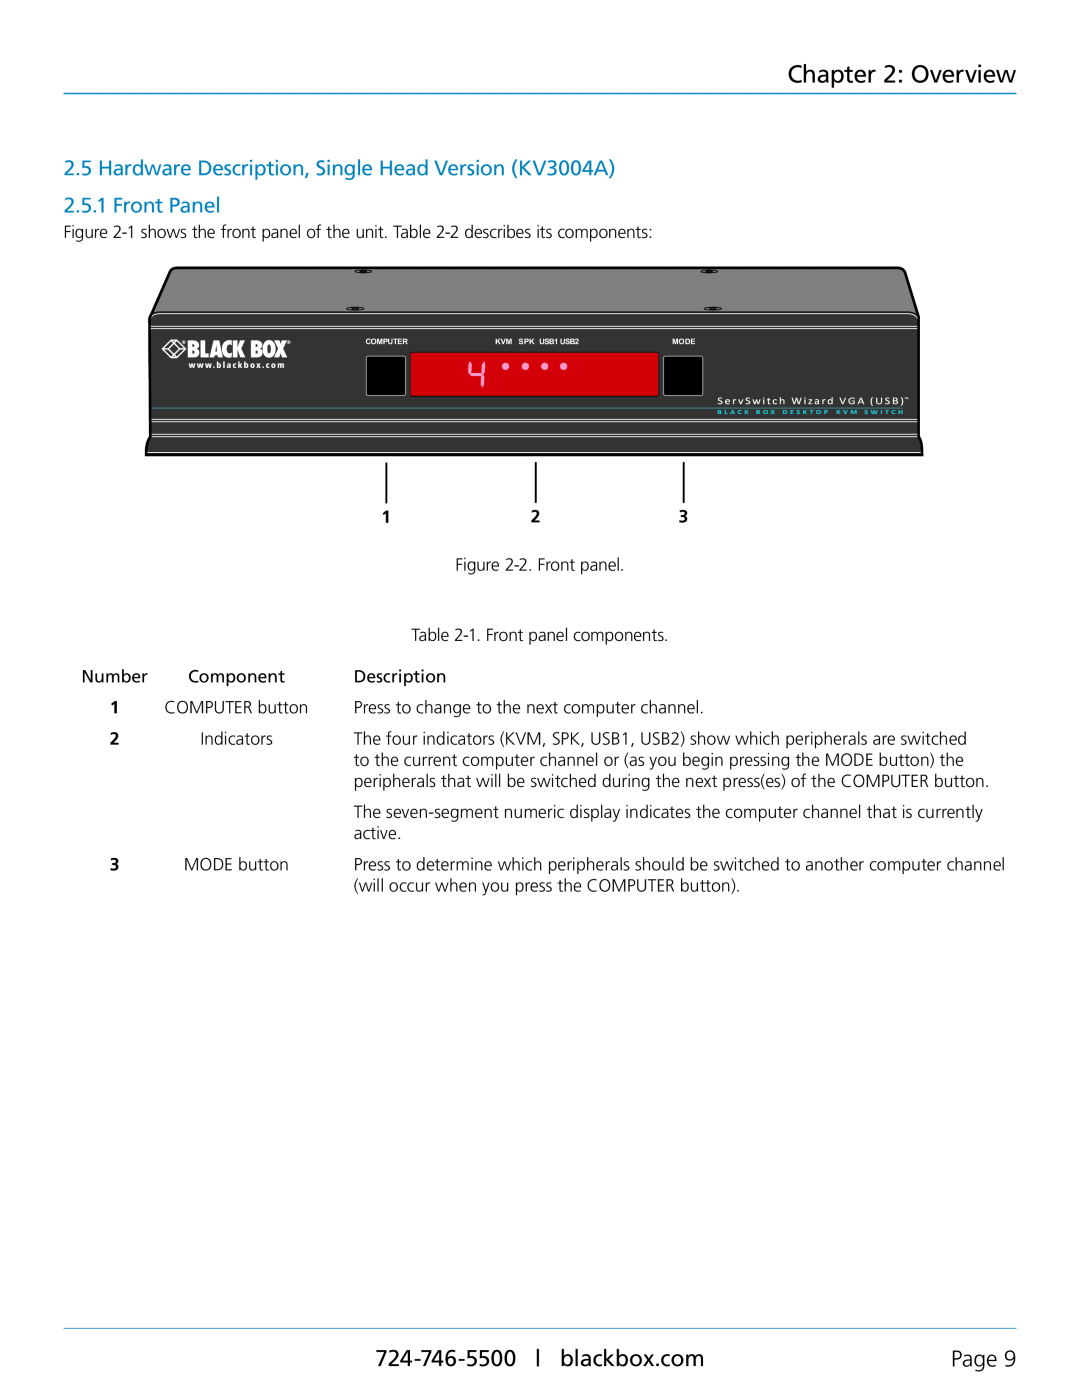 Black Box Black Box ServSwitch Wizard VGA (USB) Hardware Description, Single Head Version KV3004A, Front Panel, Overview 